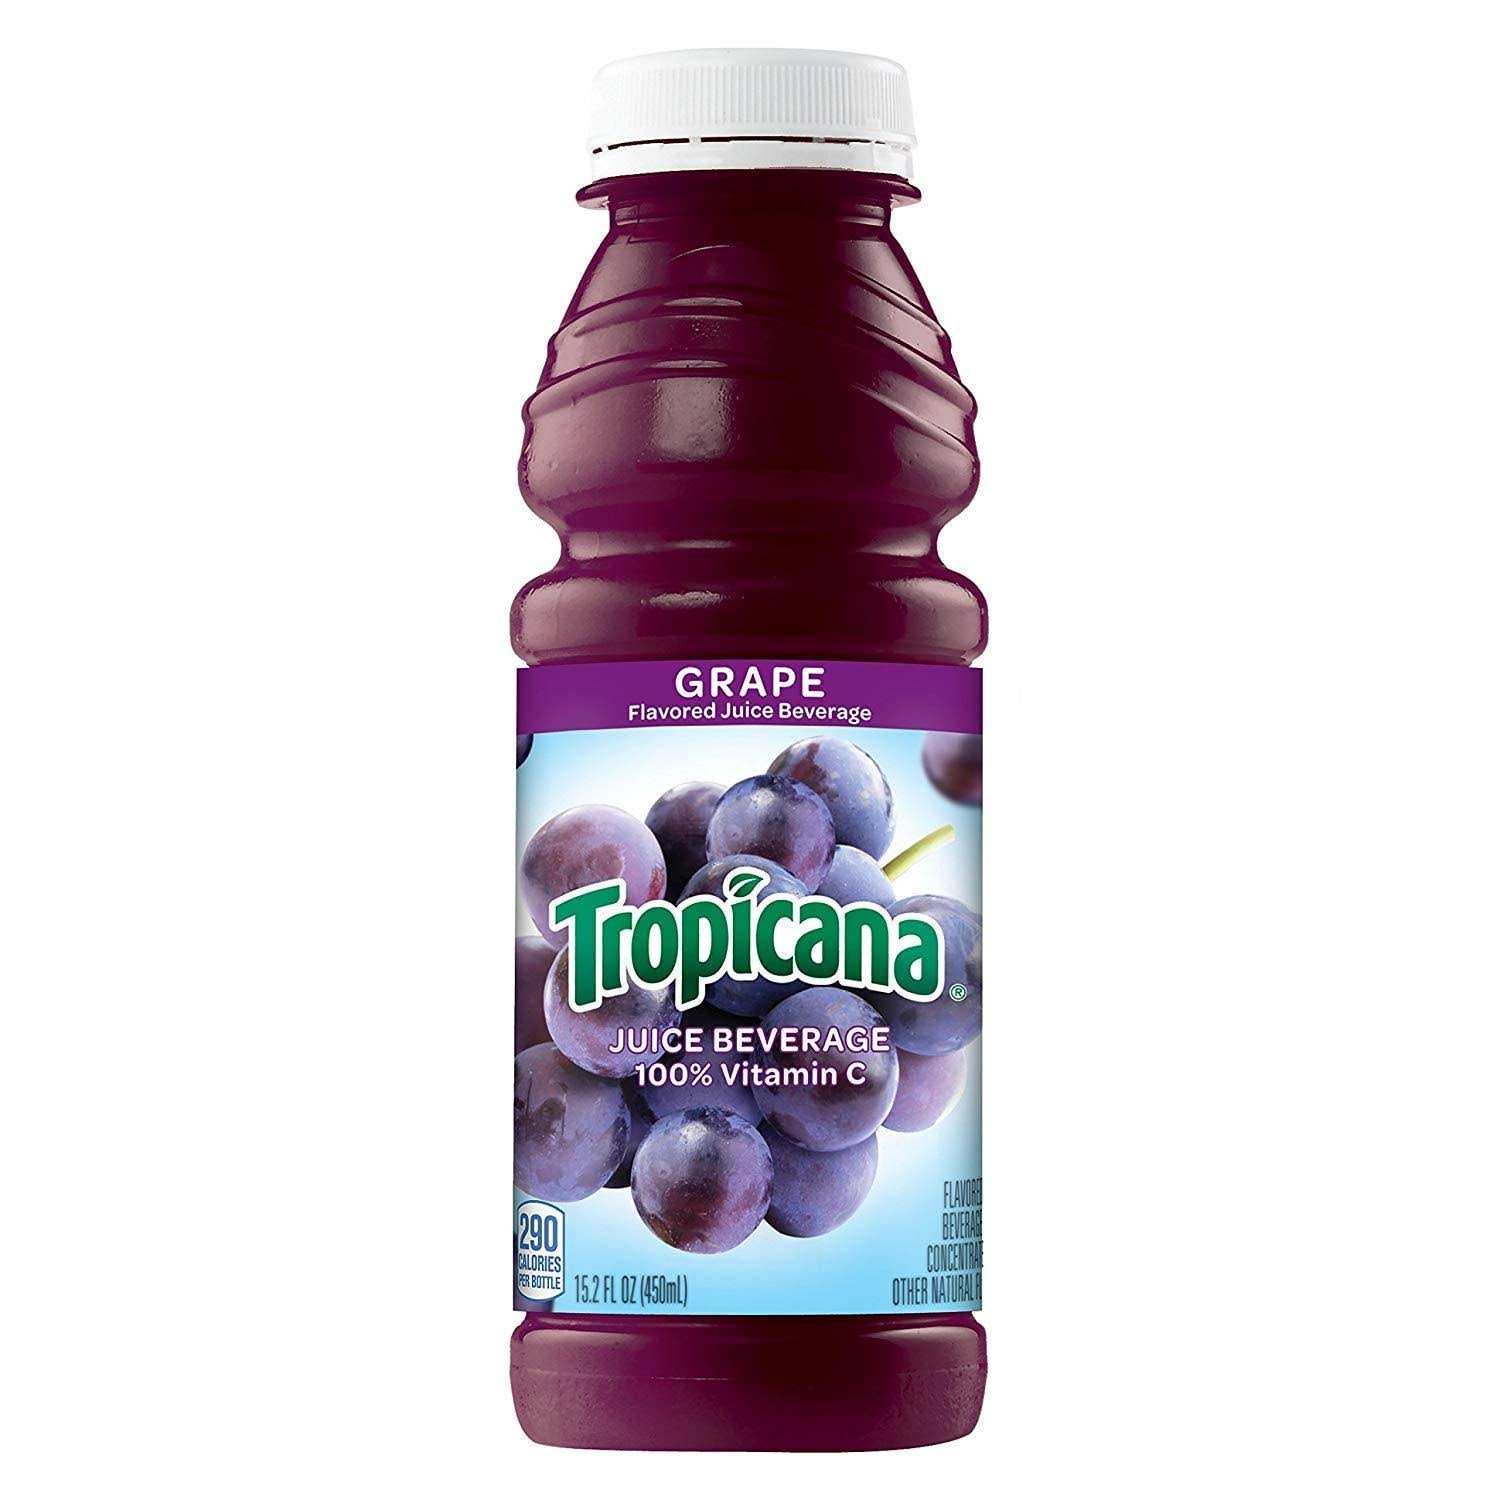 Tropicana Juice Beverage - Grape, 15.2oz